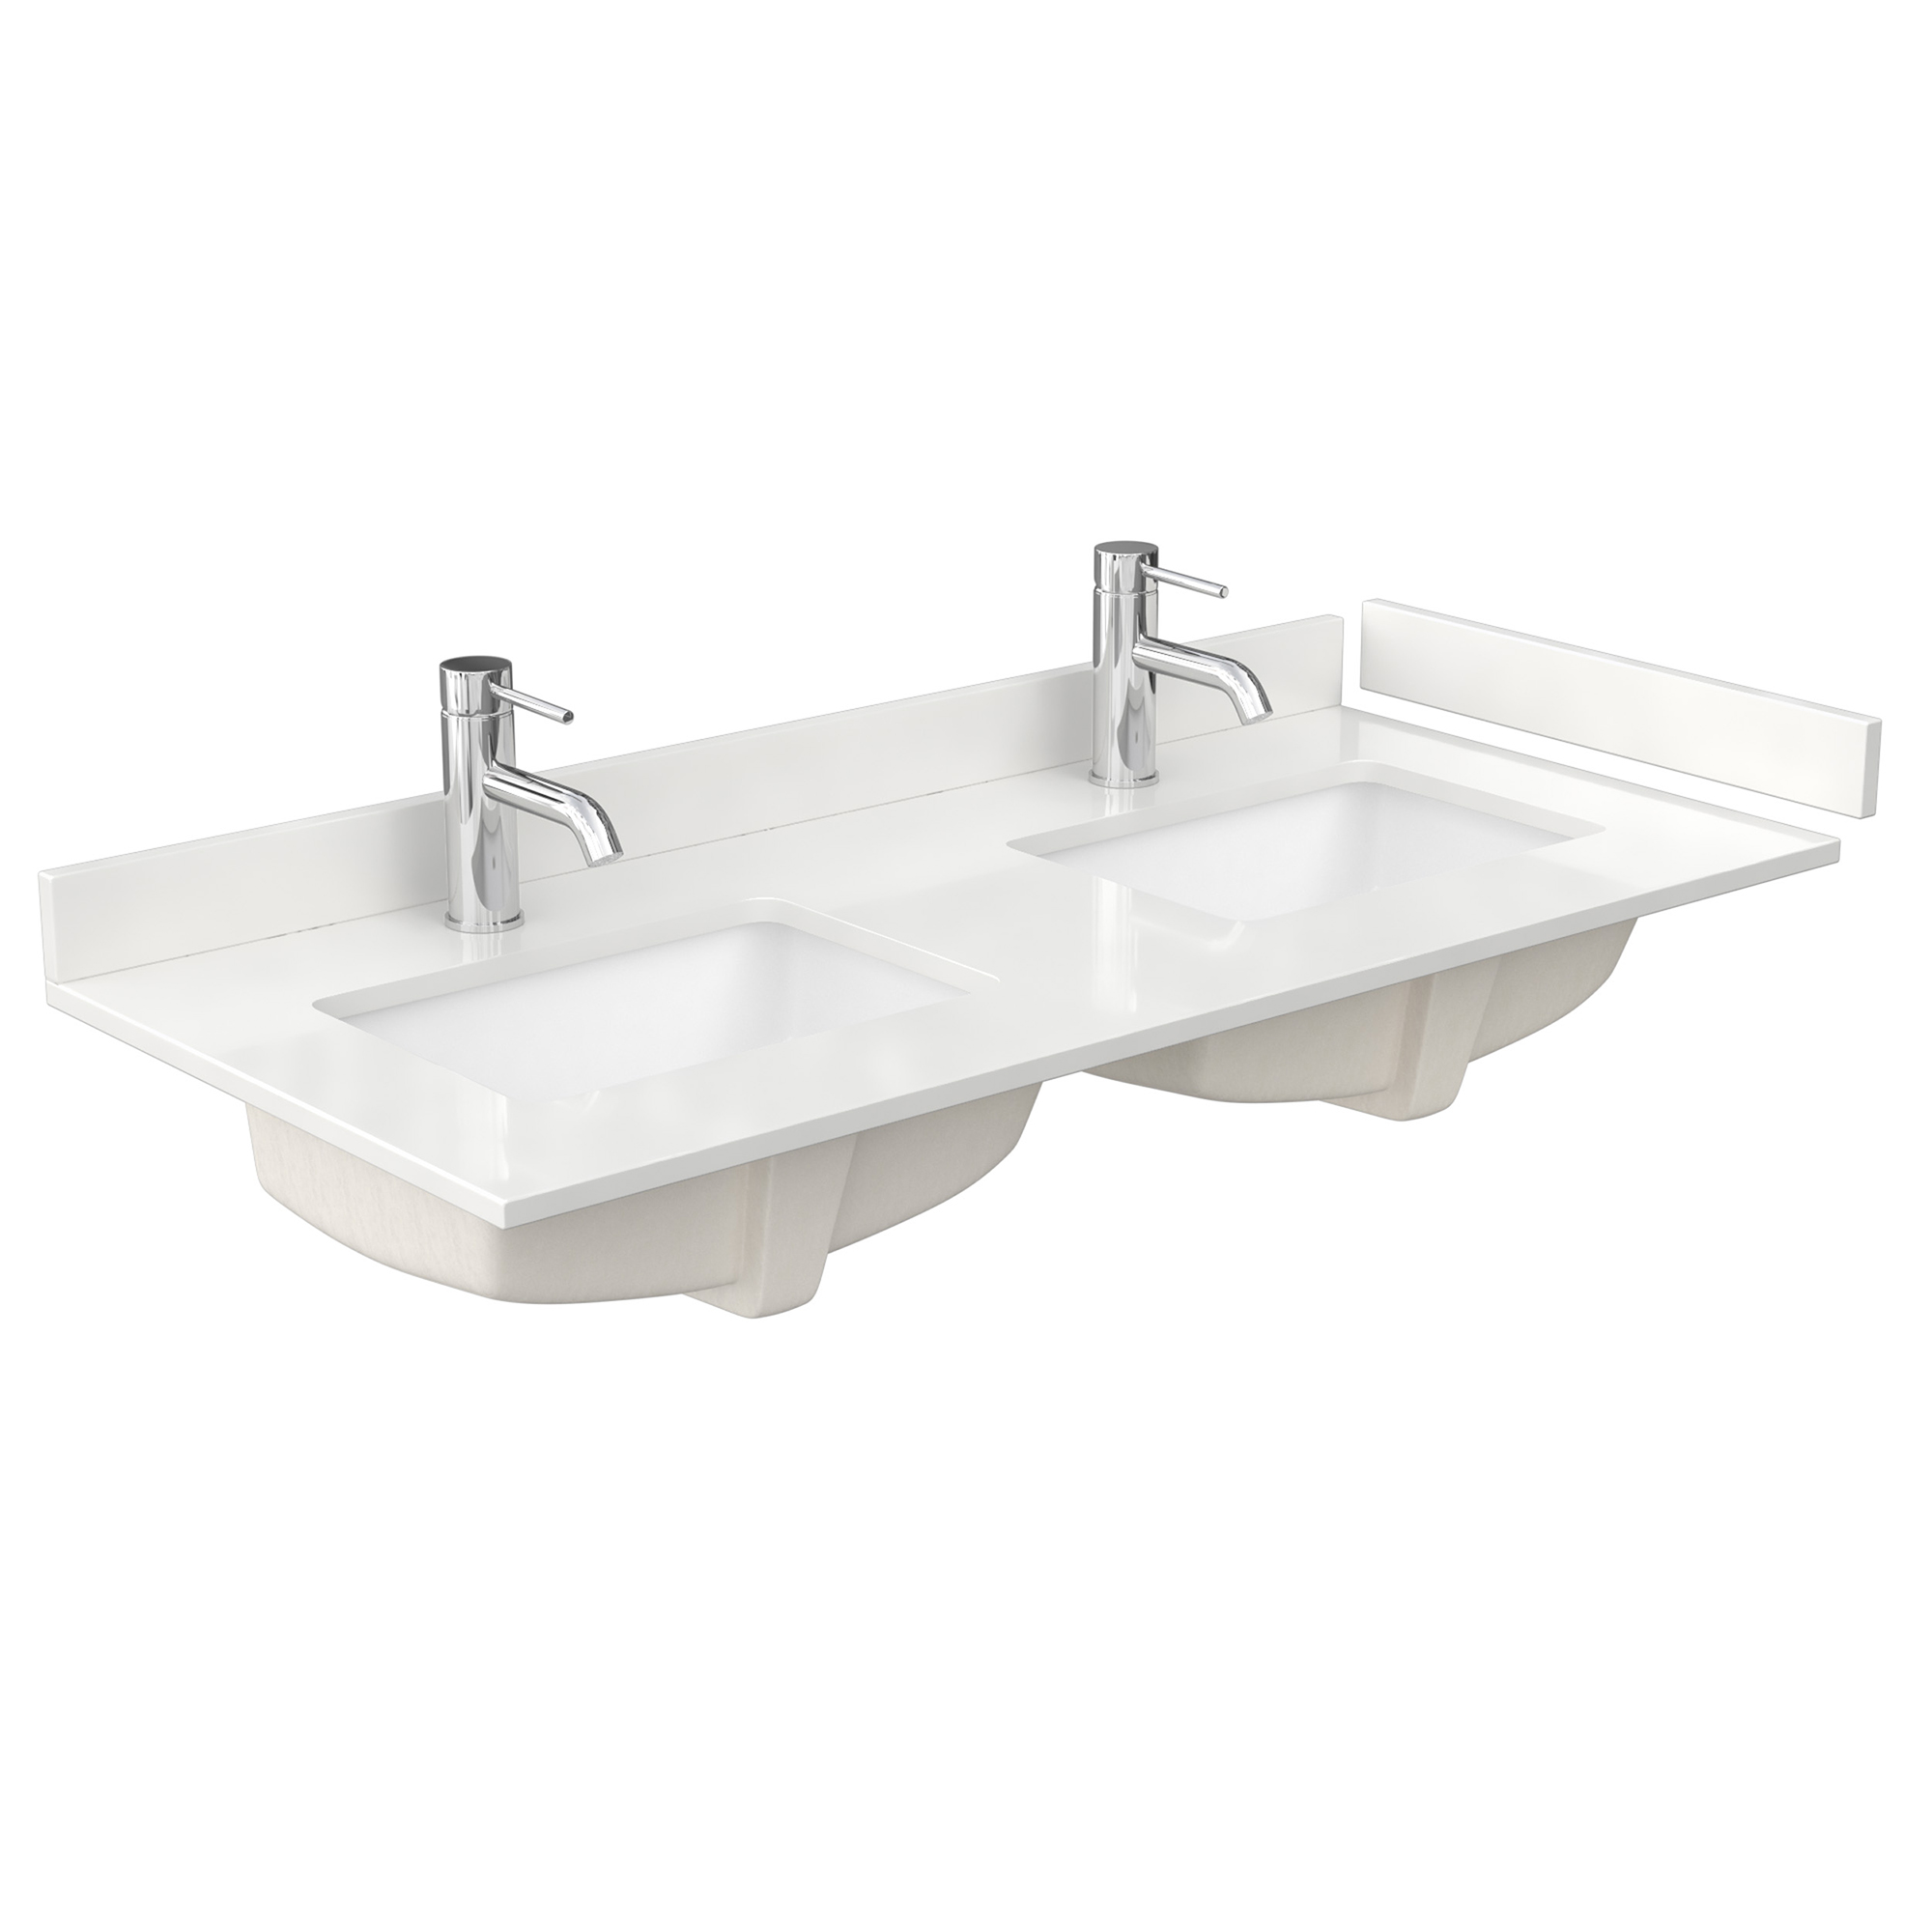 48" Double Countertop - White Quartz (1000) with Undermount Square Sink (1-Hole) - Includes Backsplash and Sidesplash WCFQC148DTOPUNSWQ